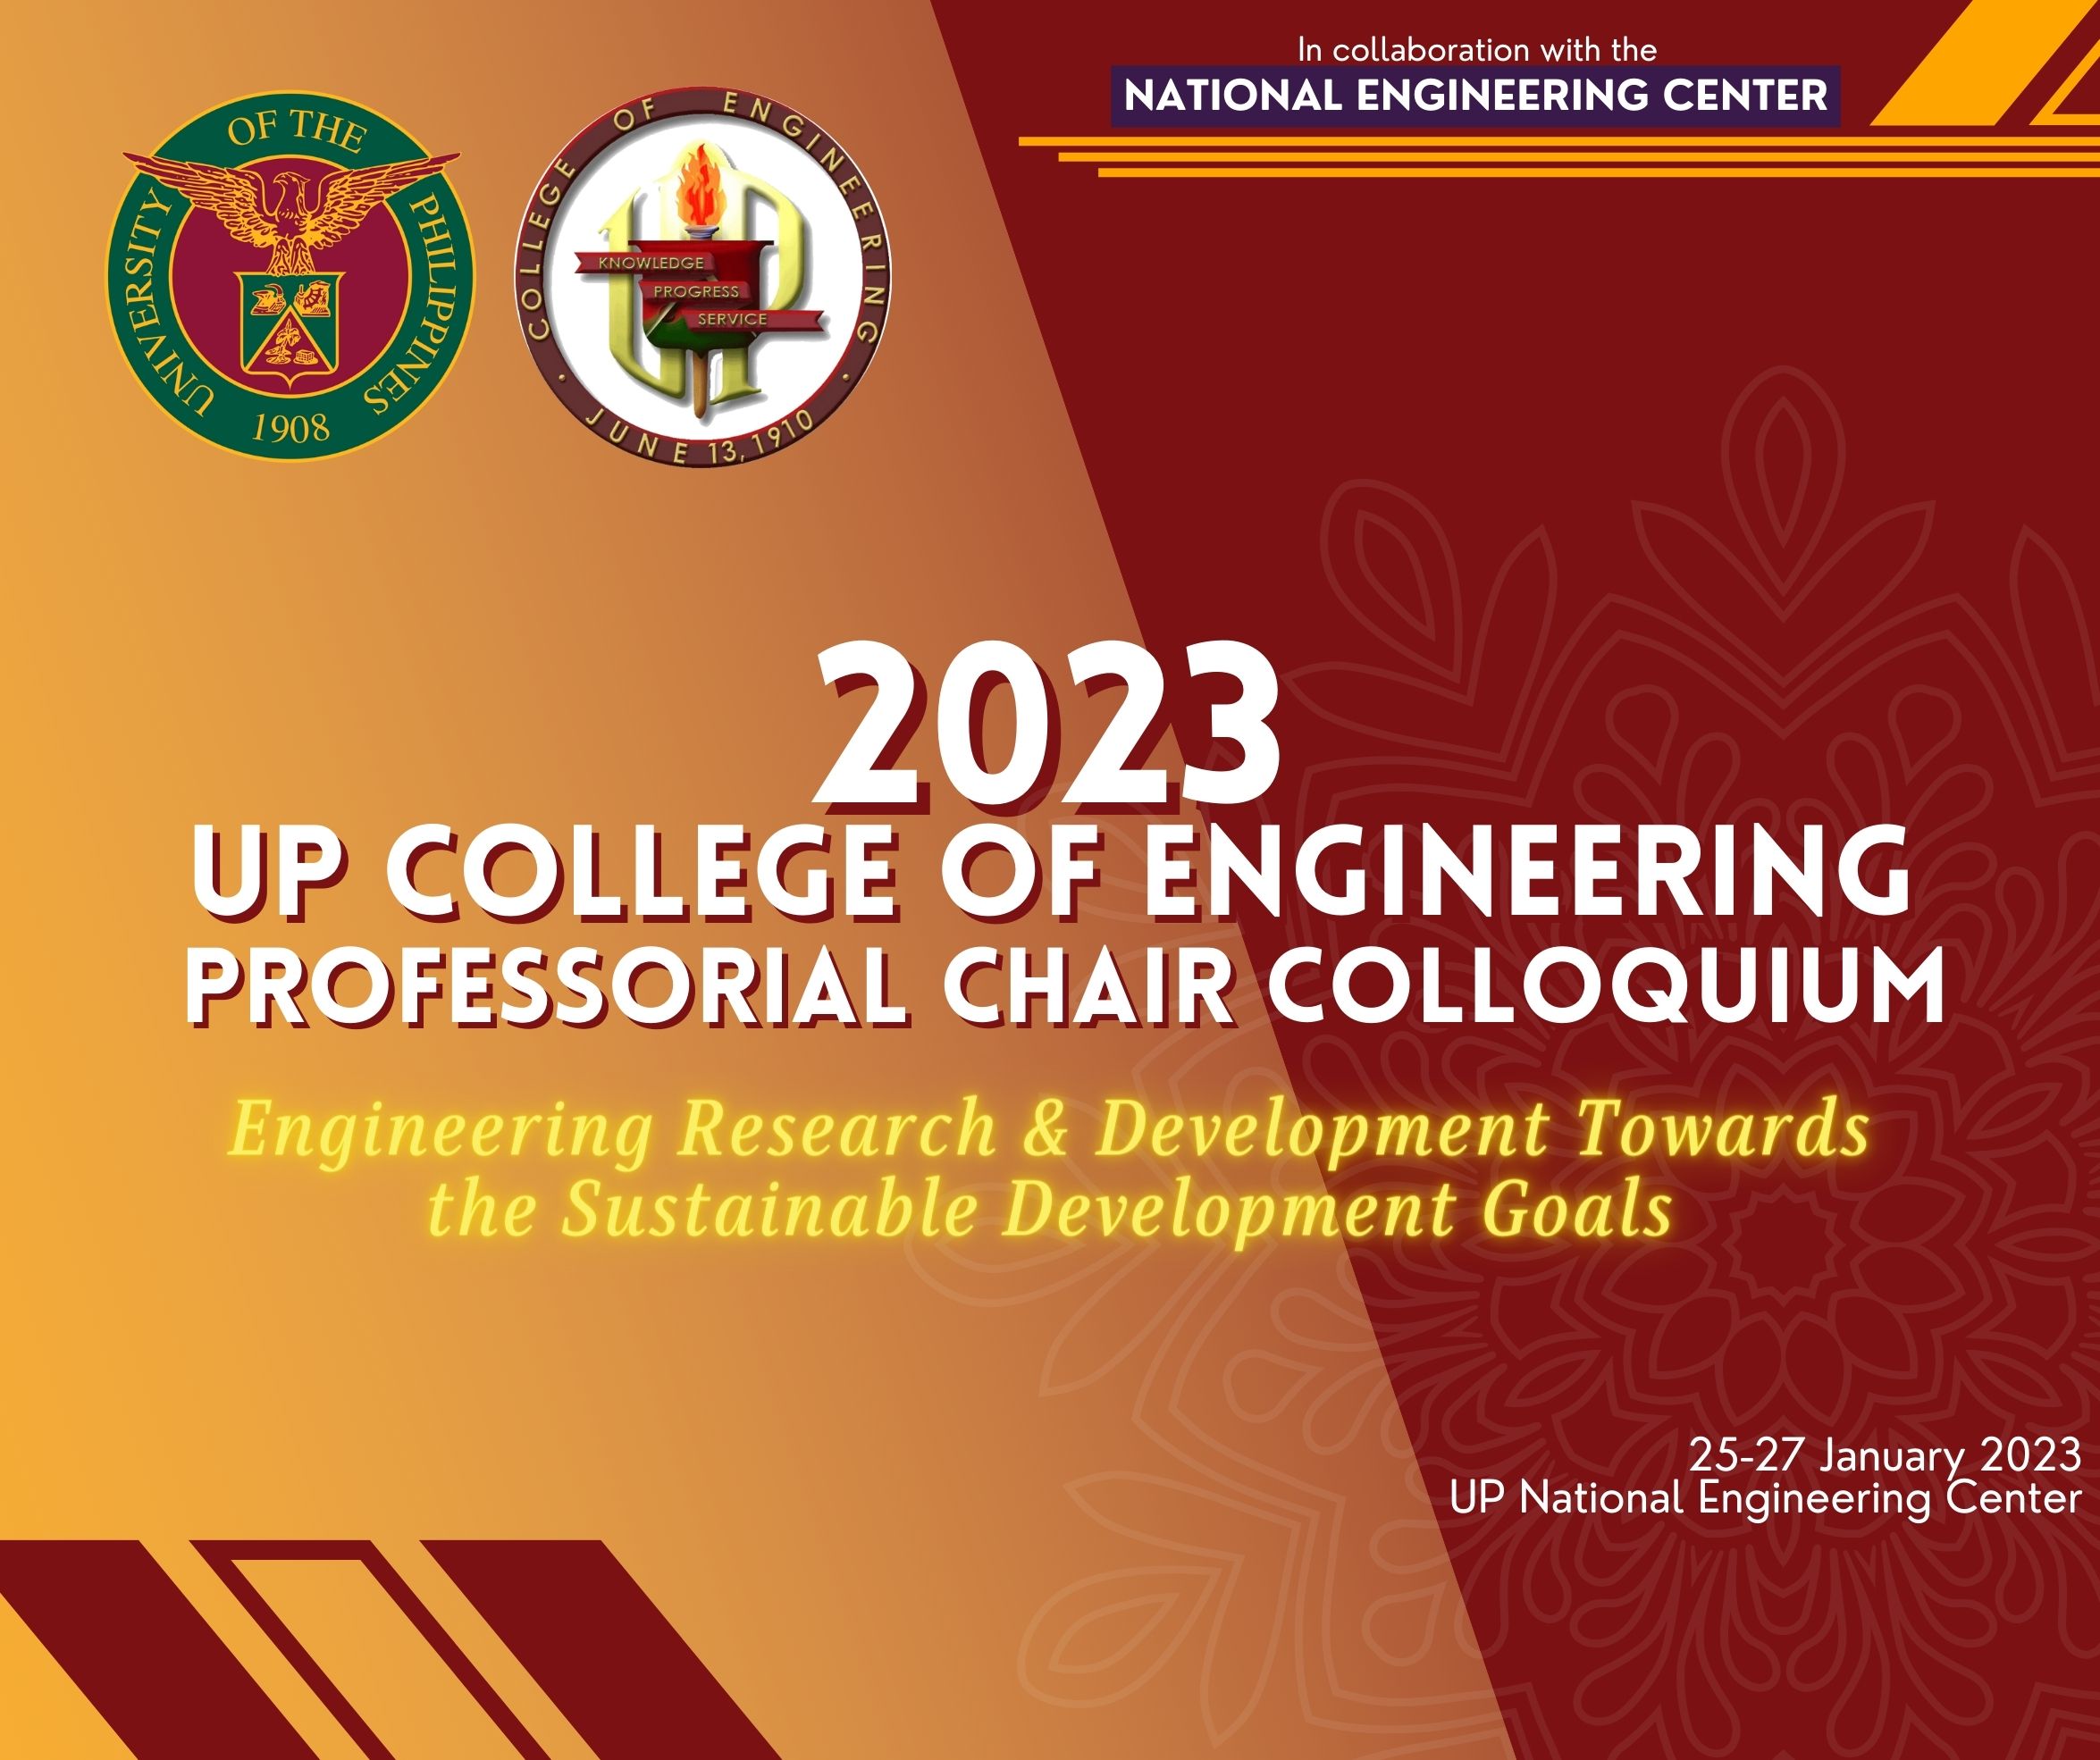 2023 UP COLLEGE OF ENGINEERING PROFESSORIAL CHAIR COLLOQUIUM